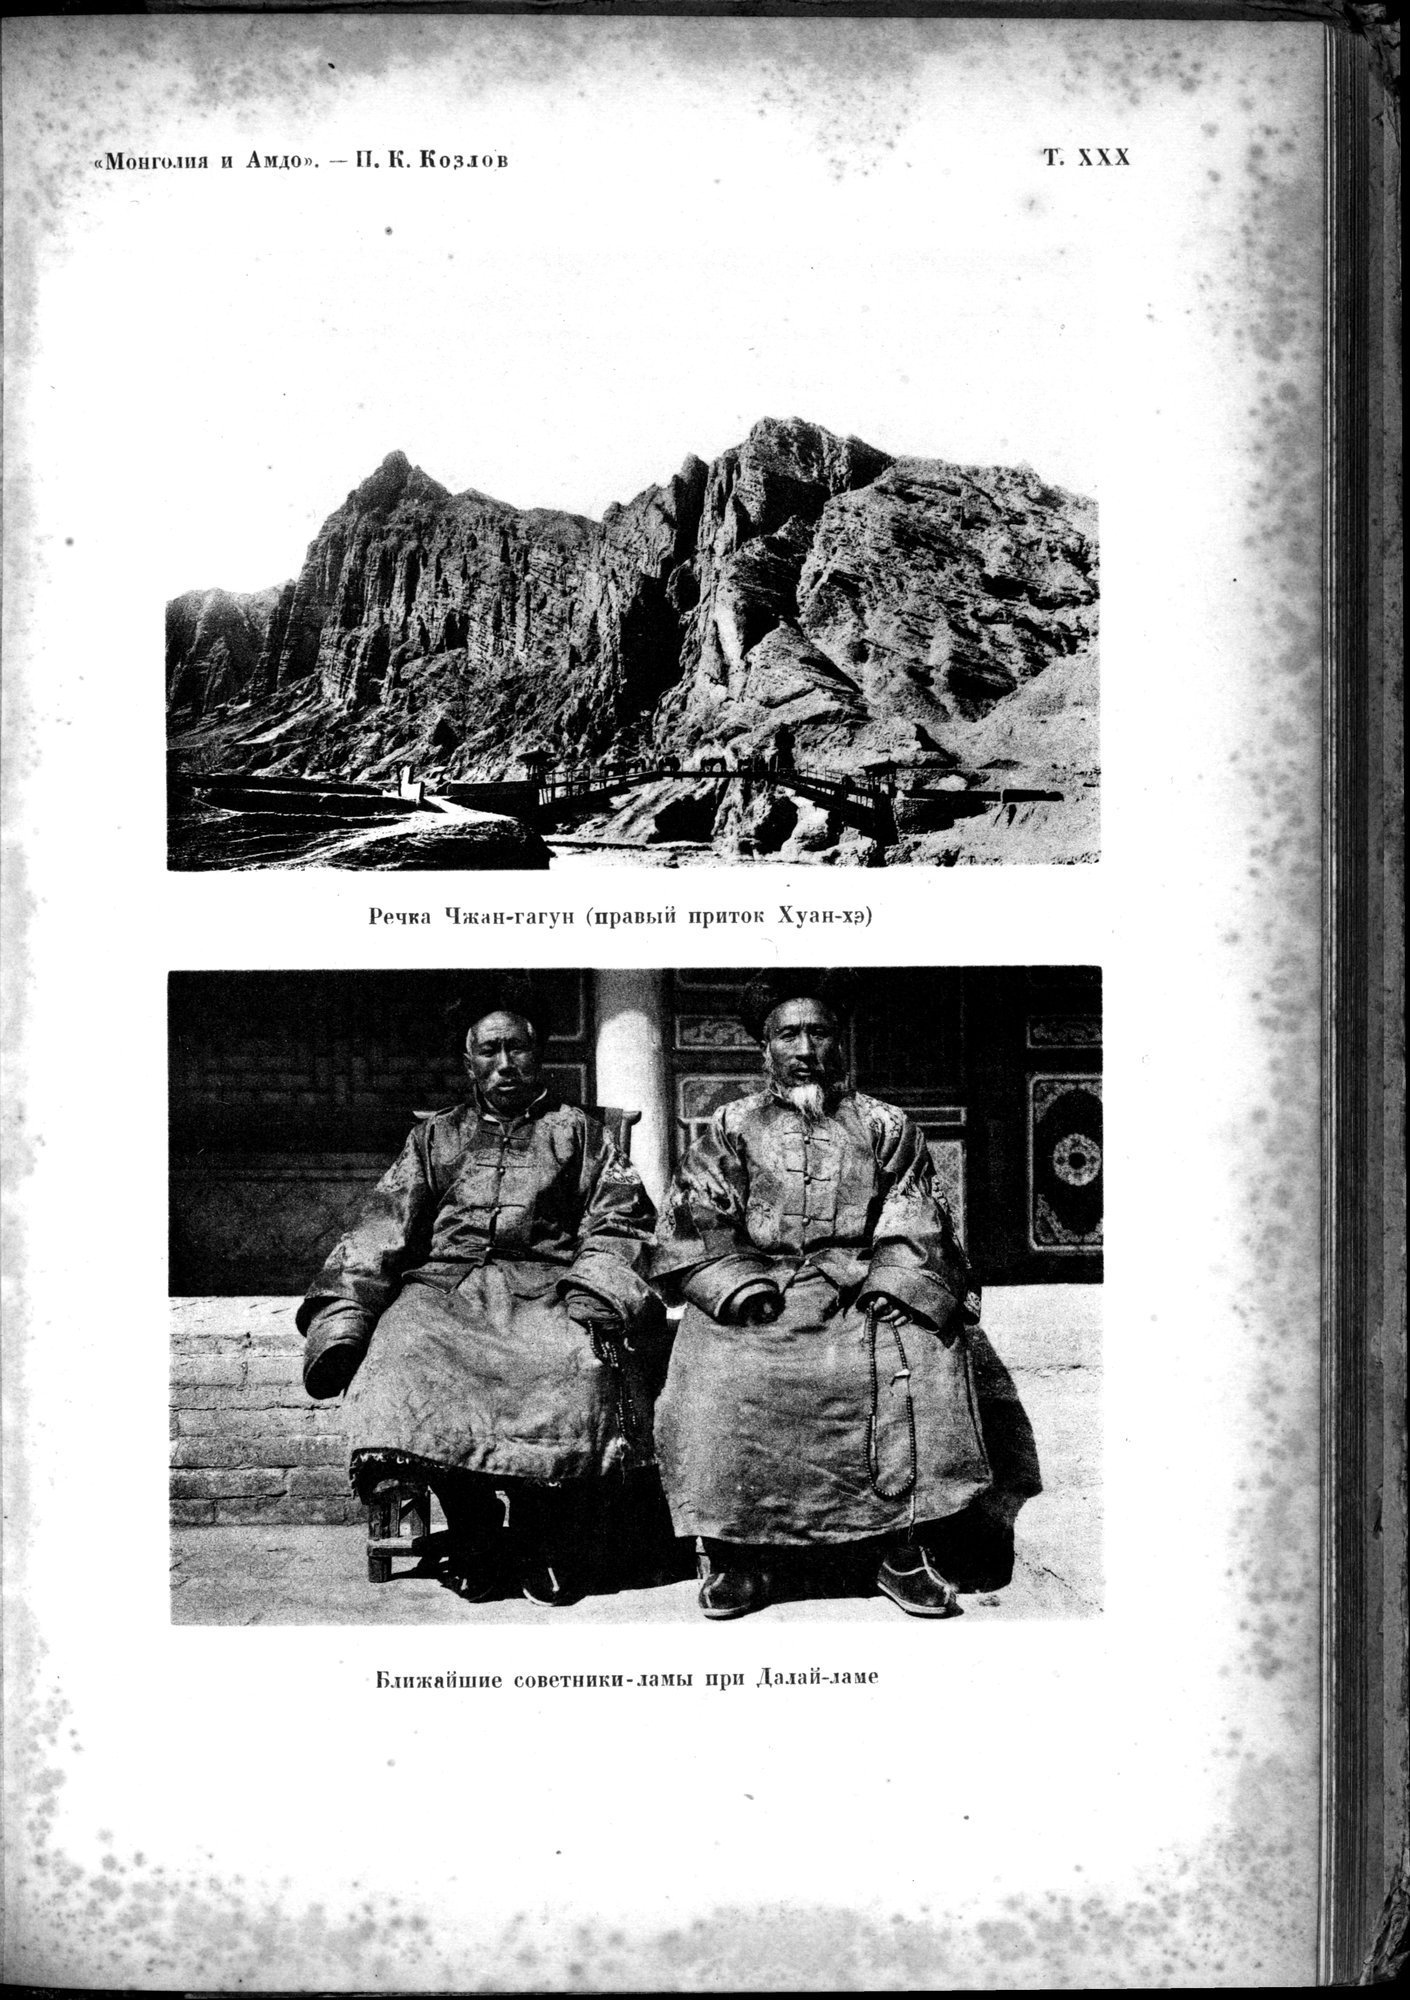 Mongoliya i Amdo i mertby gorod Khara-Khoto : vol.1 / Page 561 (Grayscale High Resolution Image)